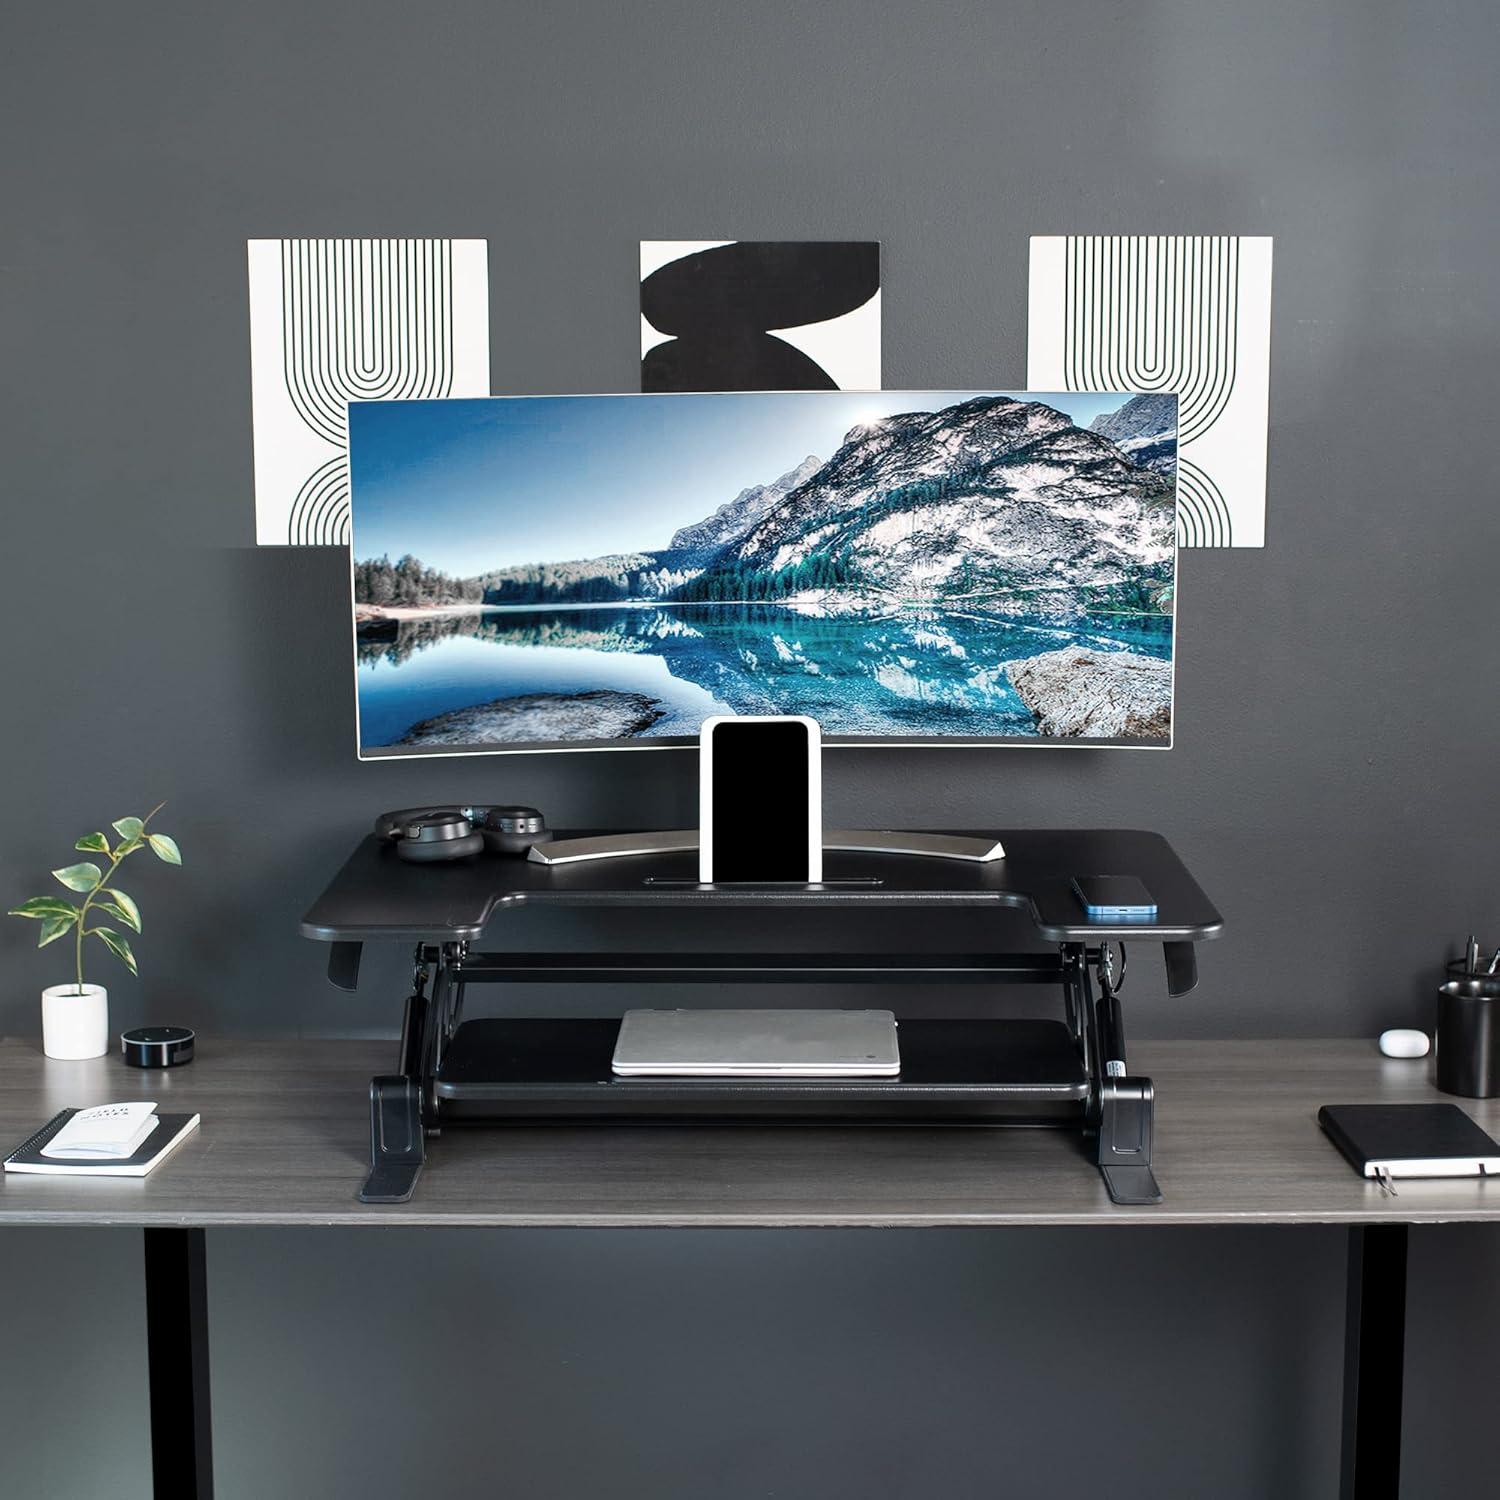 ErgoFlex 36" Black Adjustable Standing Desk Converter with Cable Management